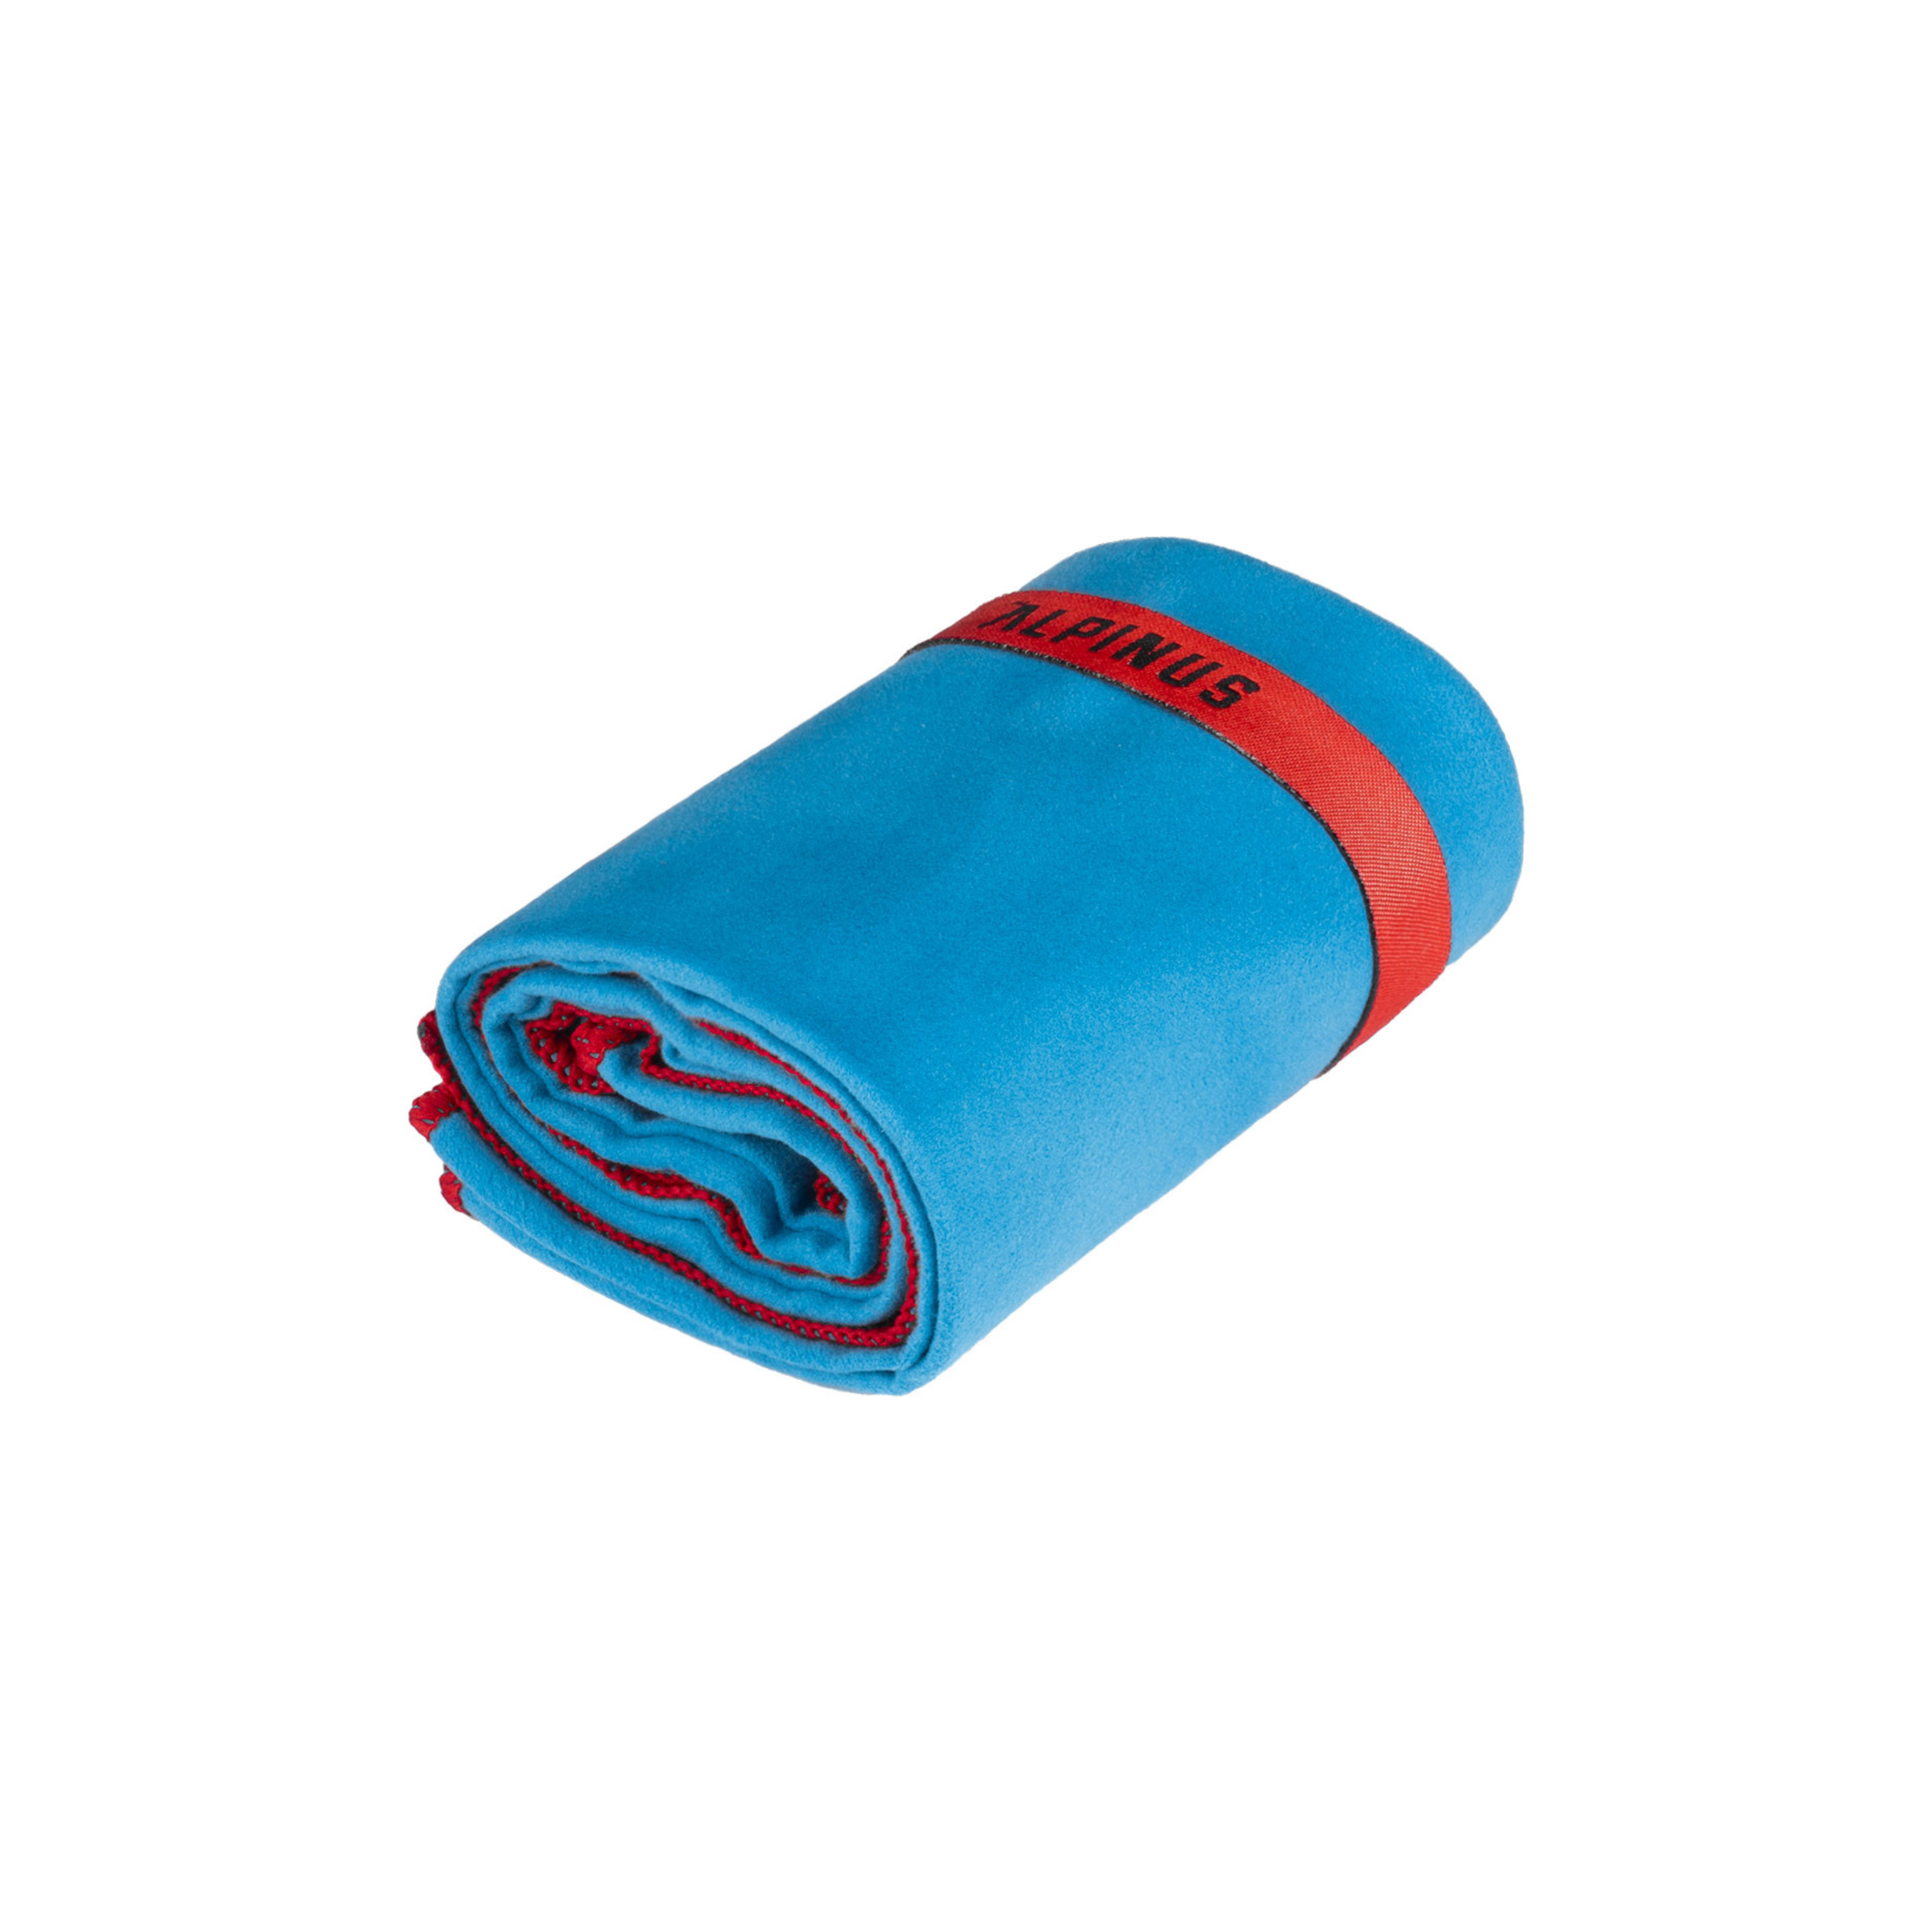 Ręcznik-Alpinus-Canoa-Blue-50x100cm-niebieski-CH43593